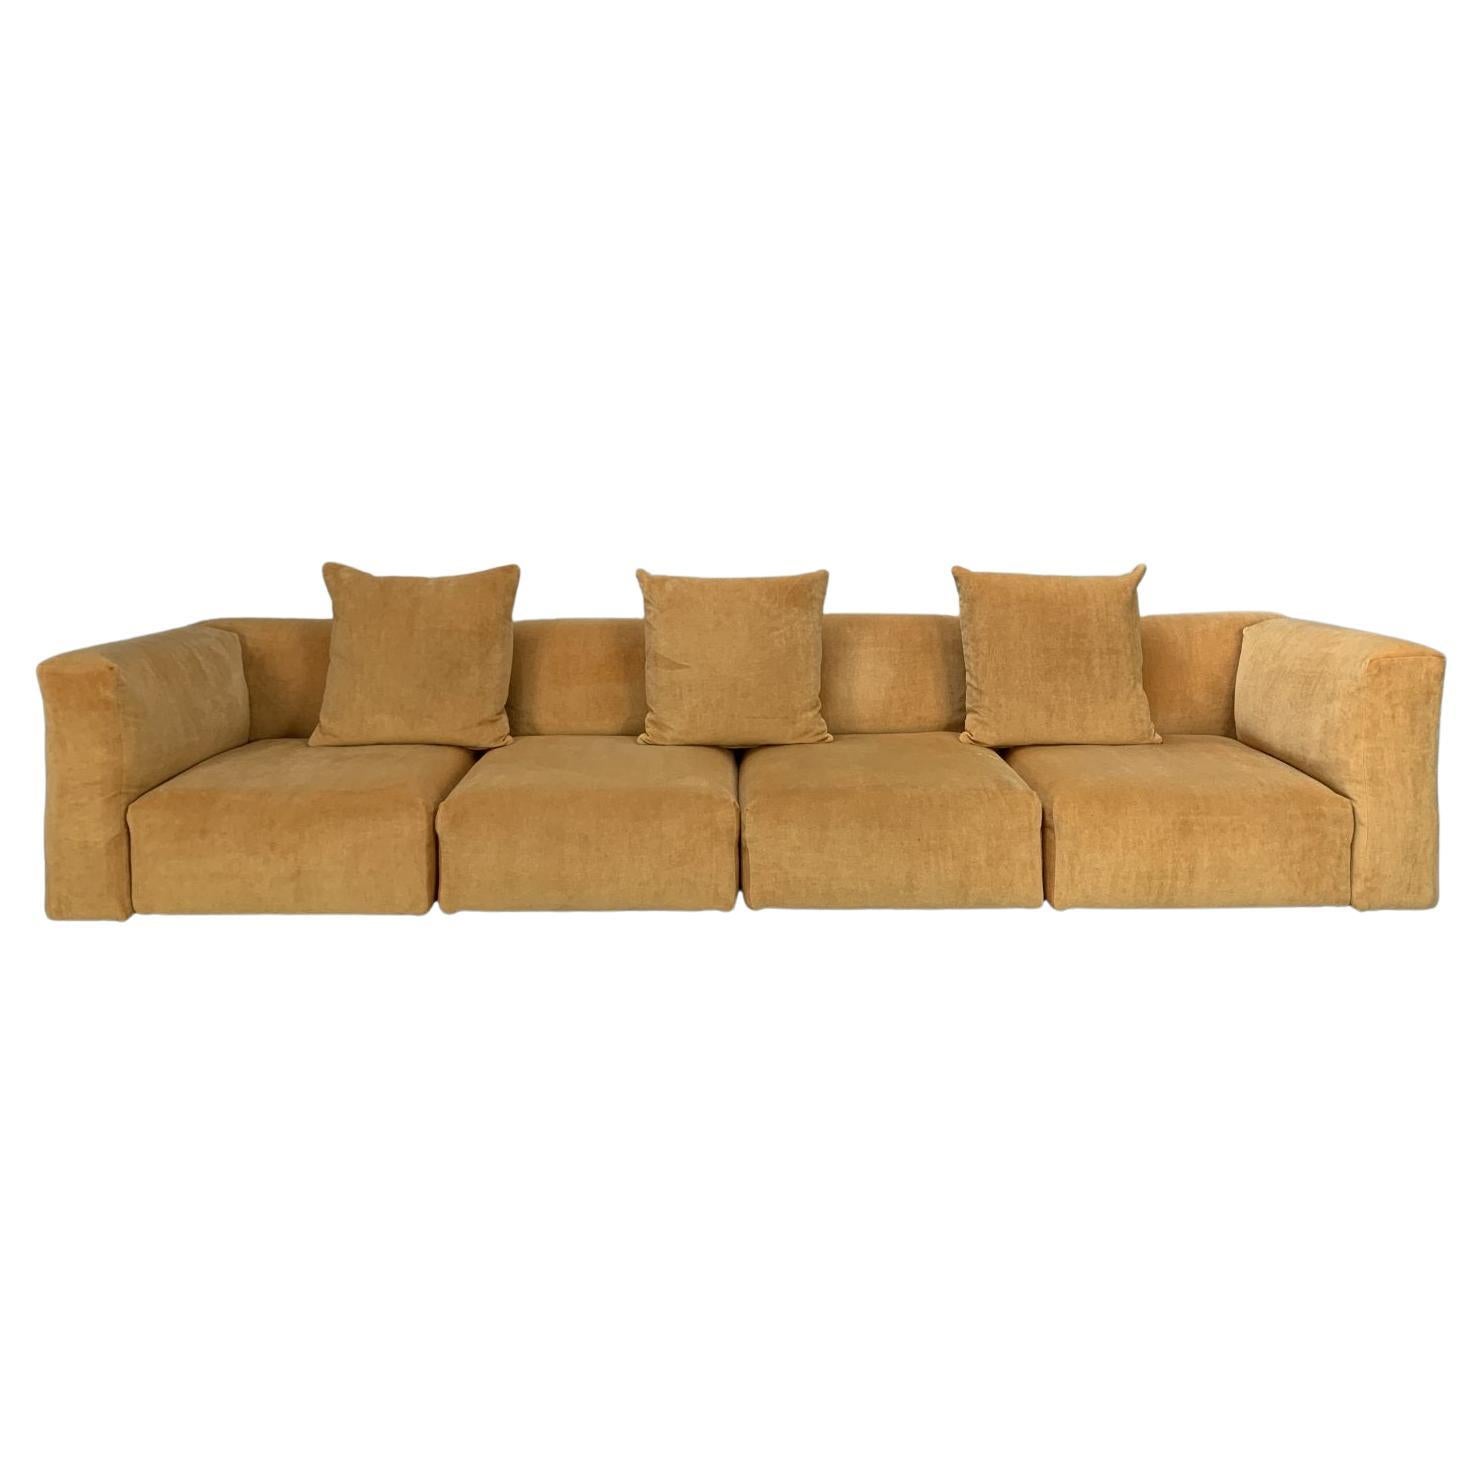 Cassina “271 Mex Cube” 4-Seat Sectional Sofa in Gold Mohair Velvet For Sale